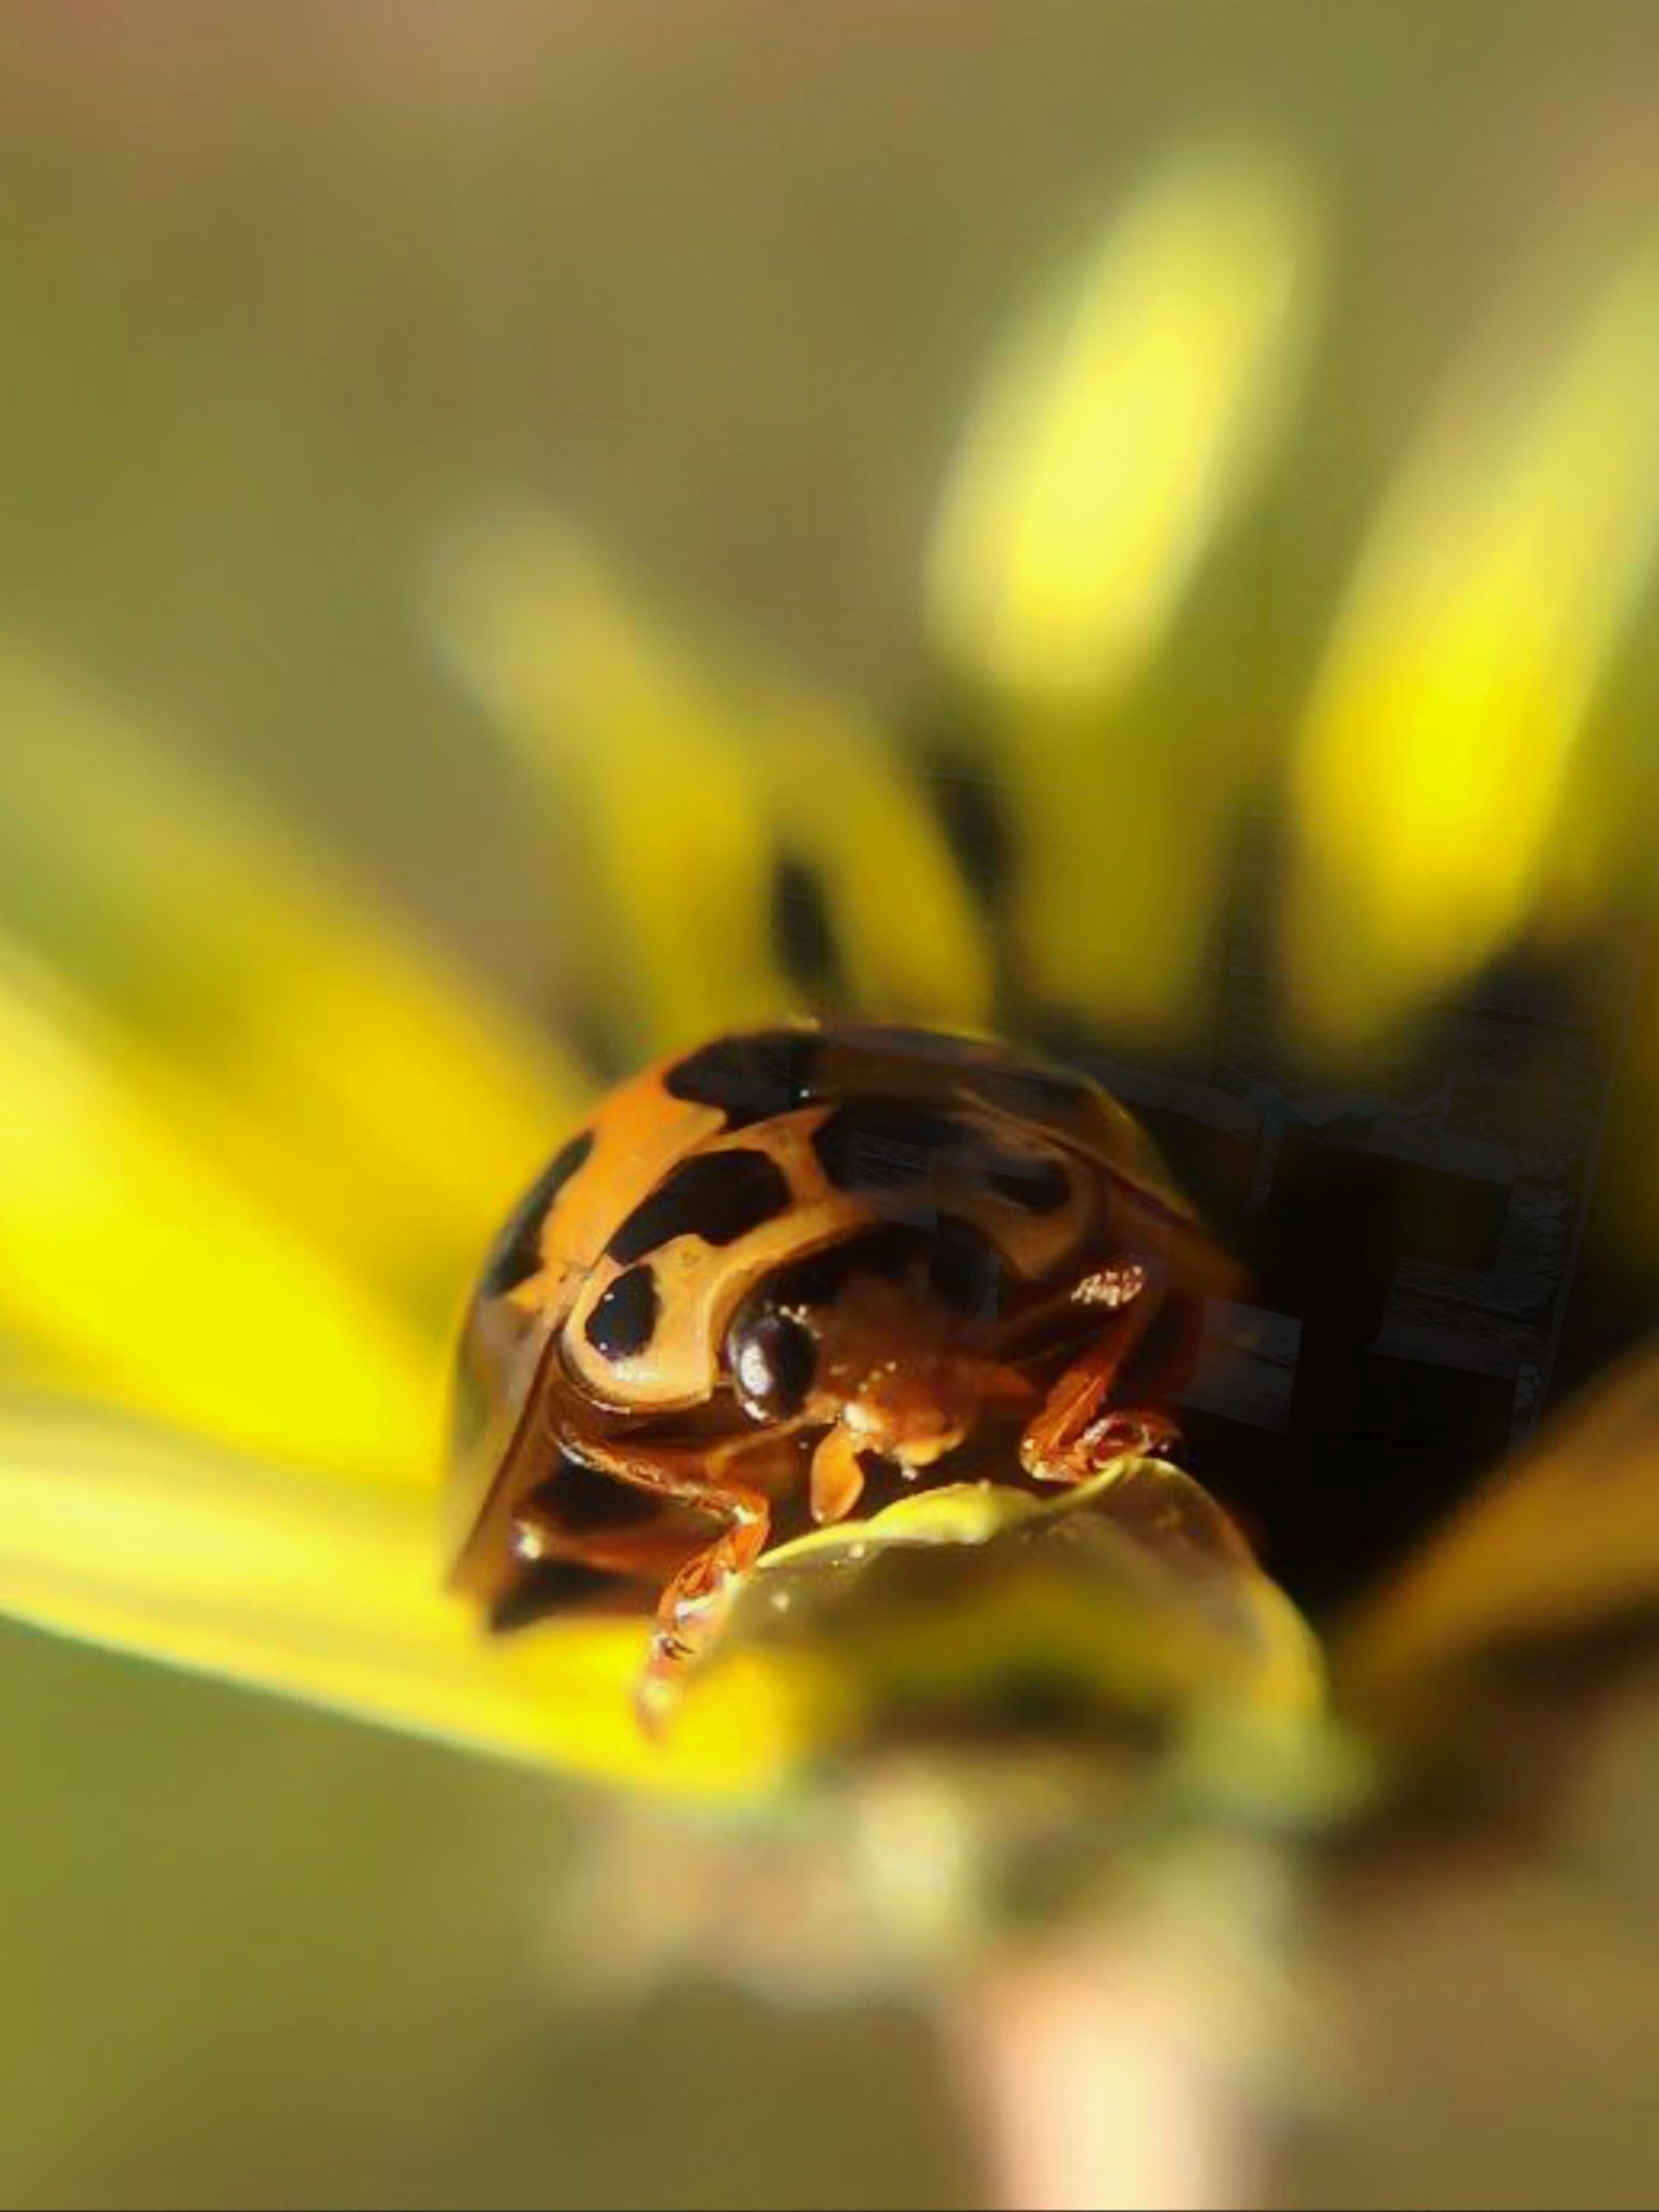 A ladybug insect